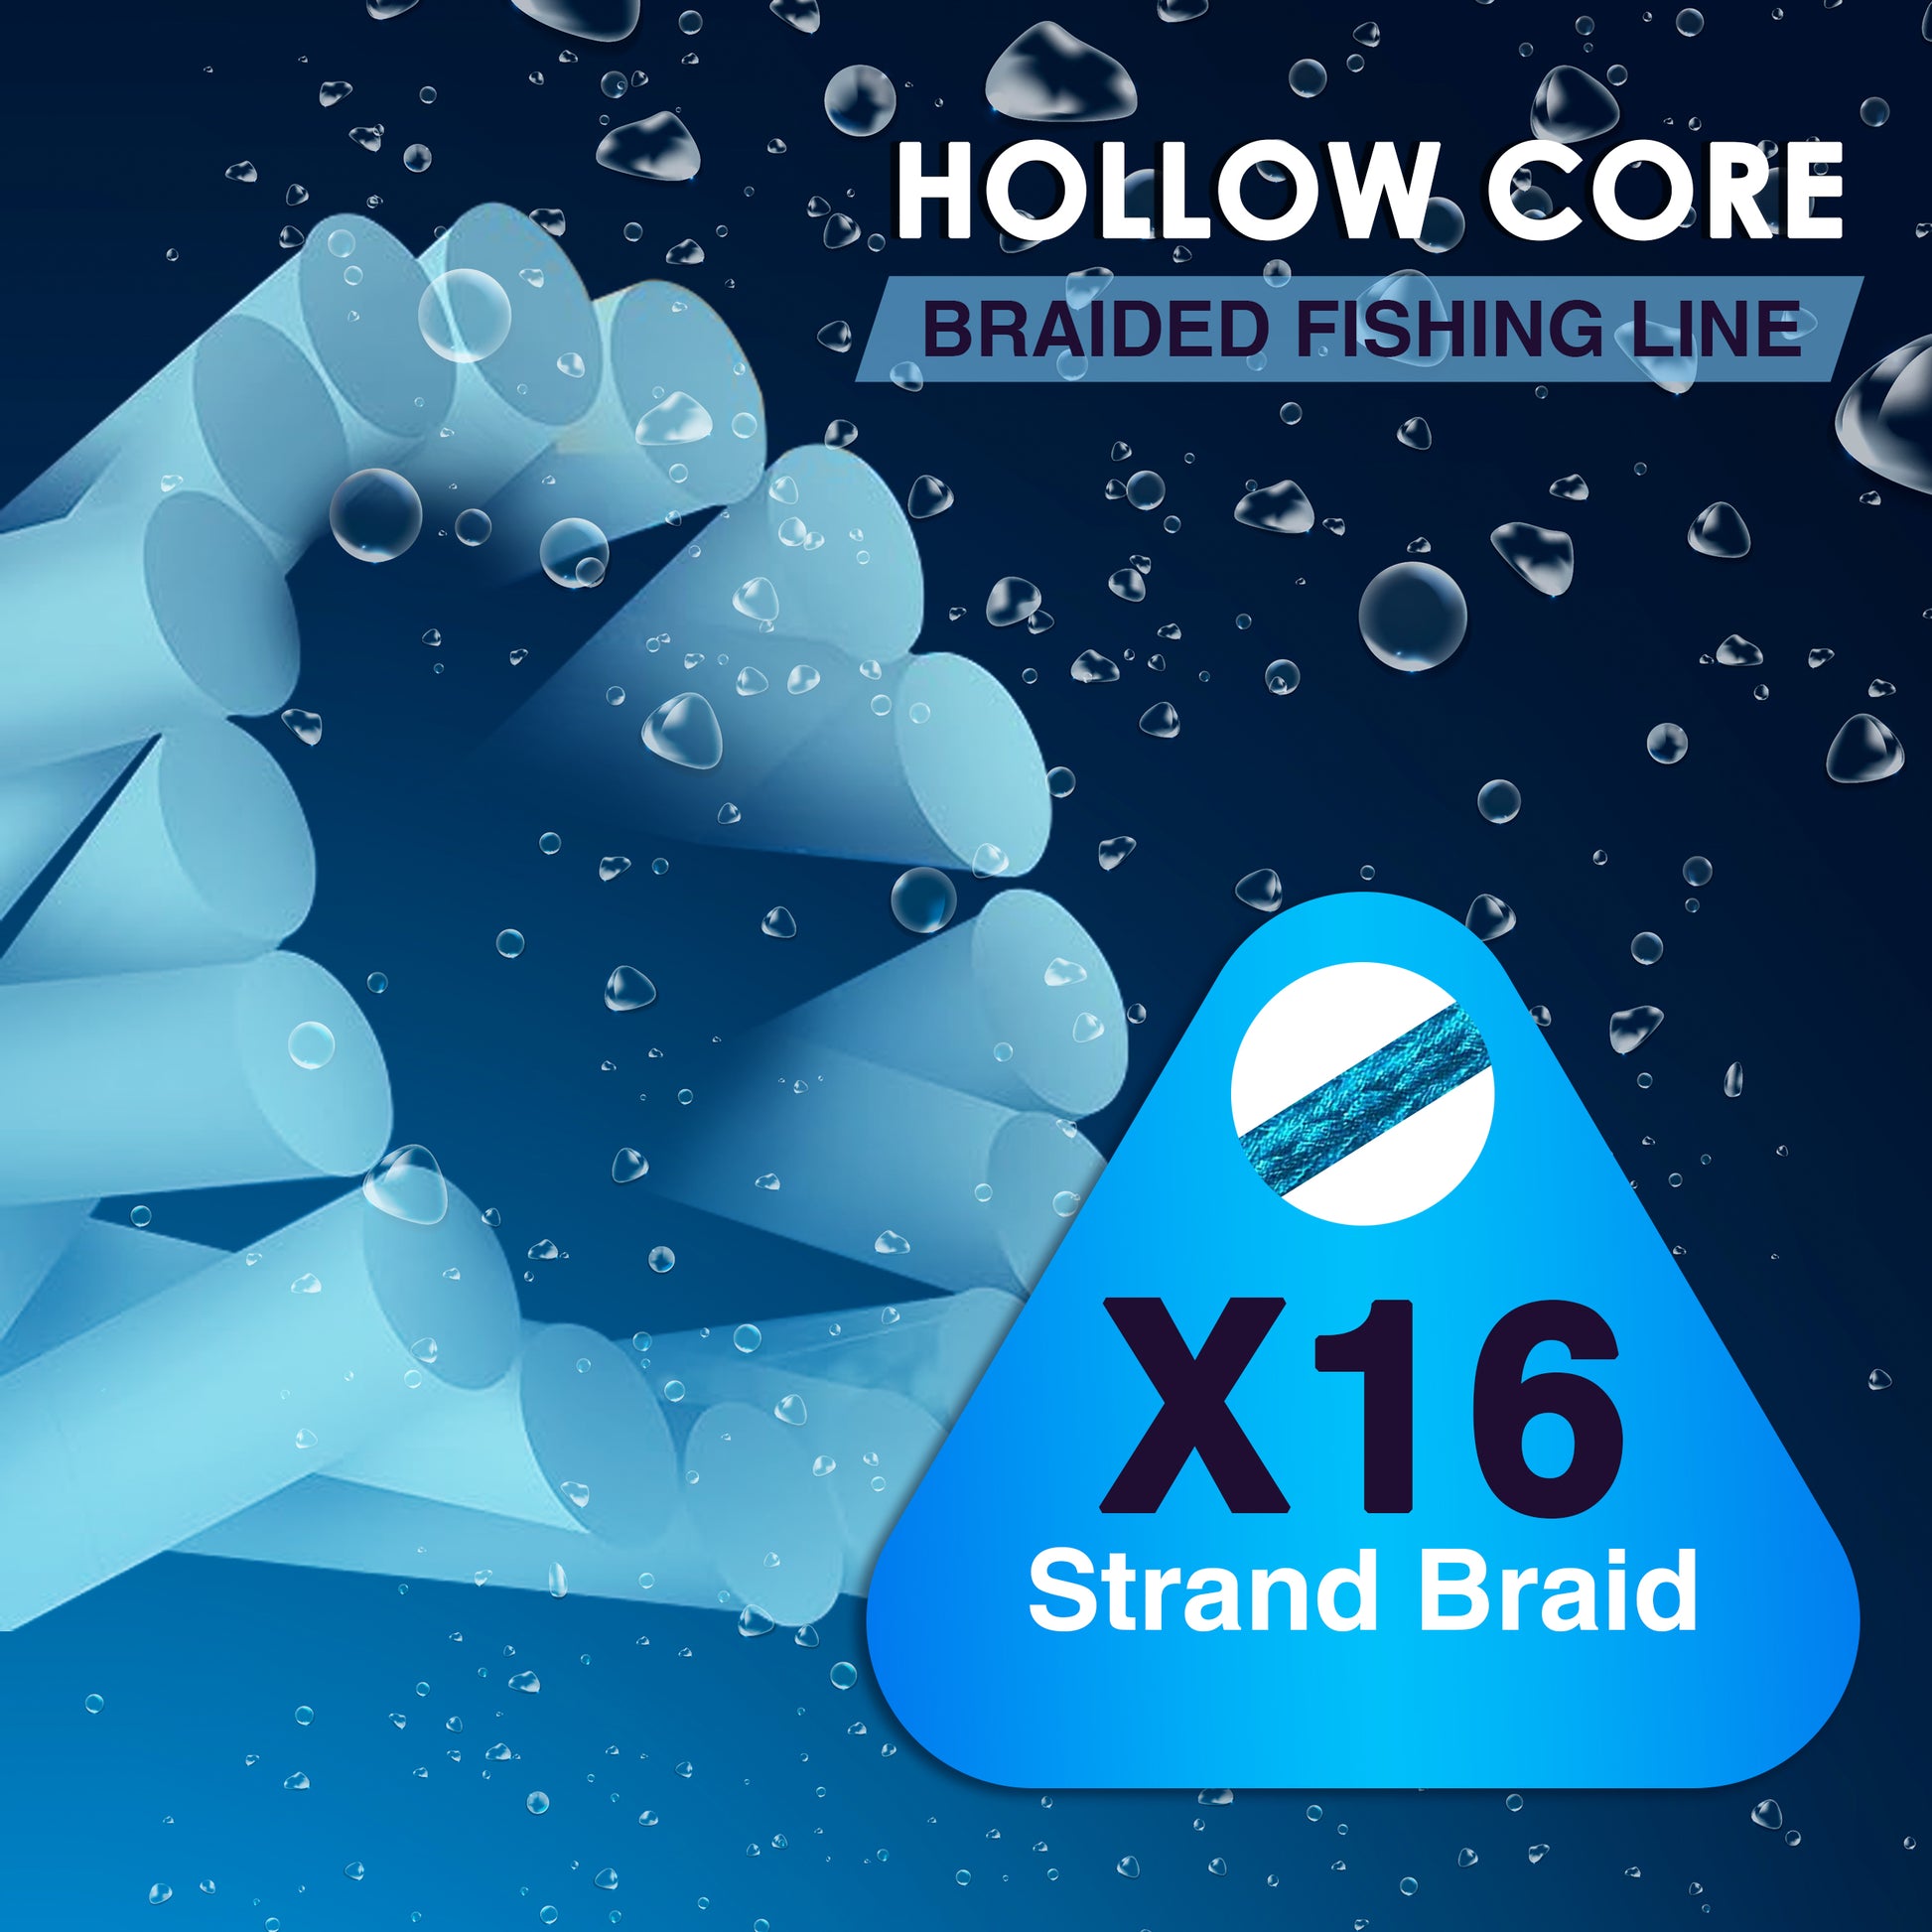 Seaguar Threadlock Ultra Strong 16 Strand Hollow-Core Braid – Lo